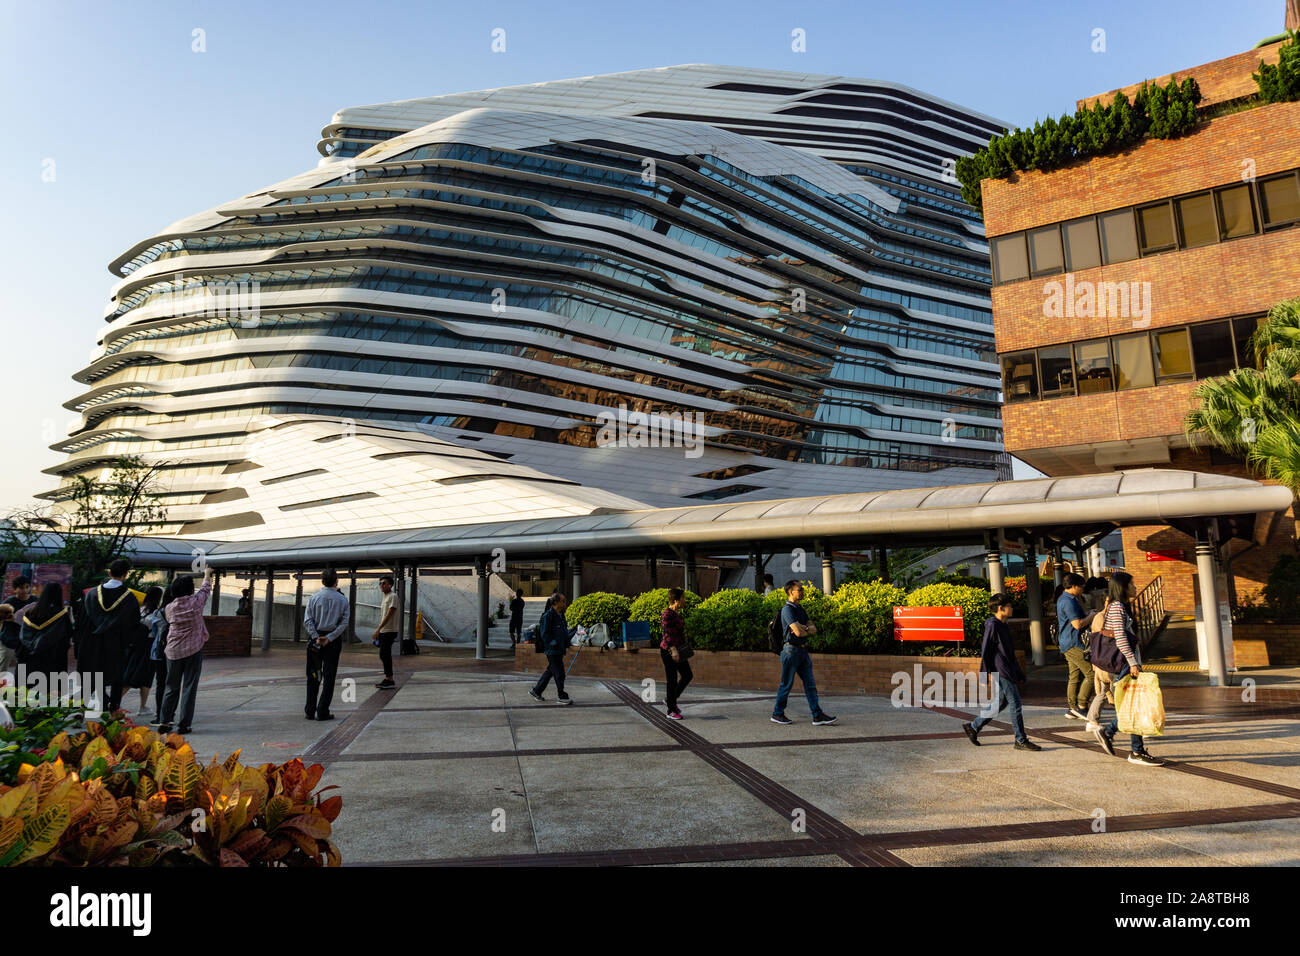 Architecture by Pritzker award-winning architect Zaha Hadid, Jockey Club Innovation Tower in Hong Kong Stock Photo